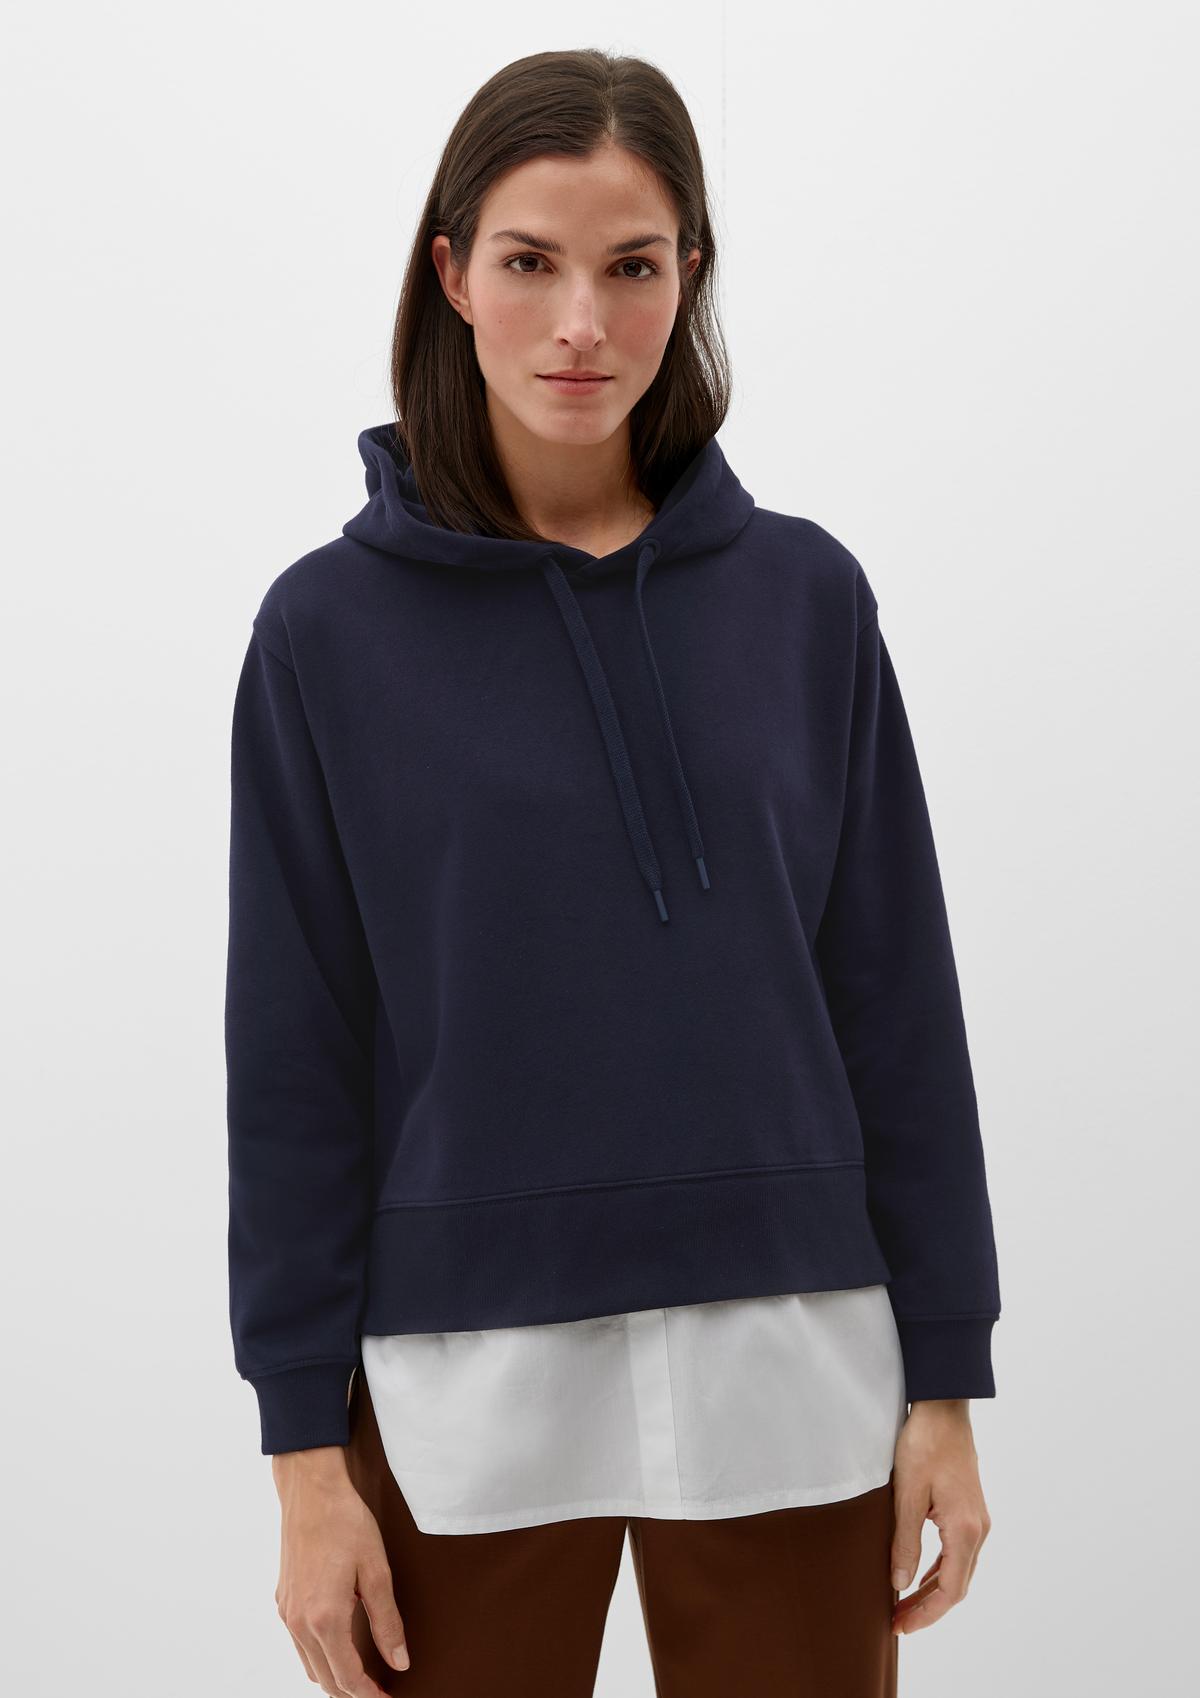 a navy in Sweatshirt layered look -